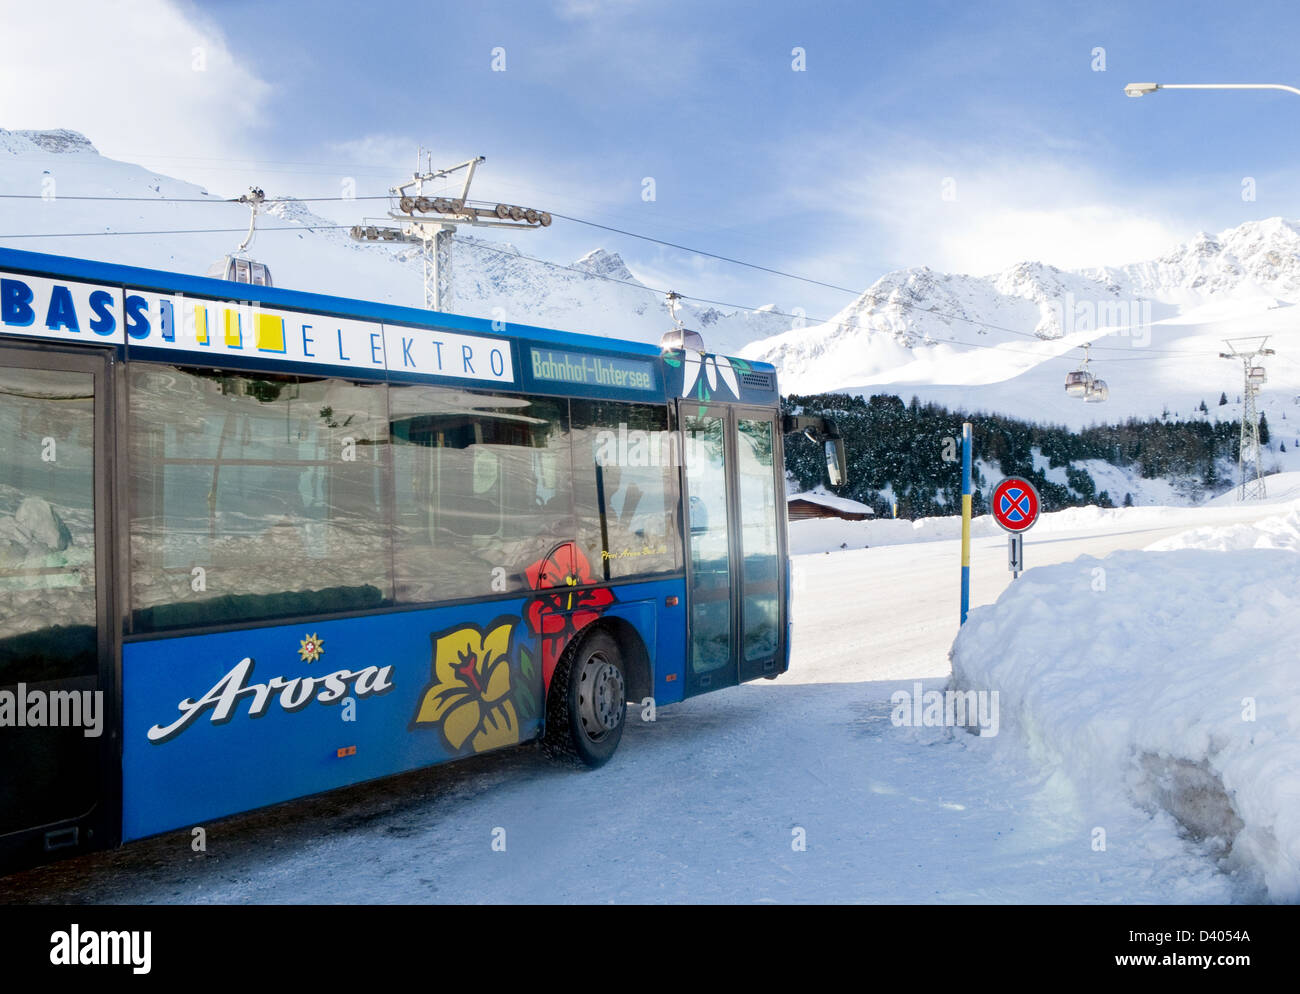 The Arosa ski resort ski bus transport, Arosa, Switzerland Europe Stock Photo